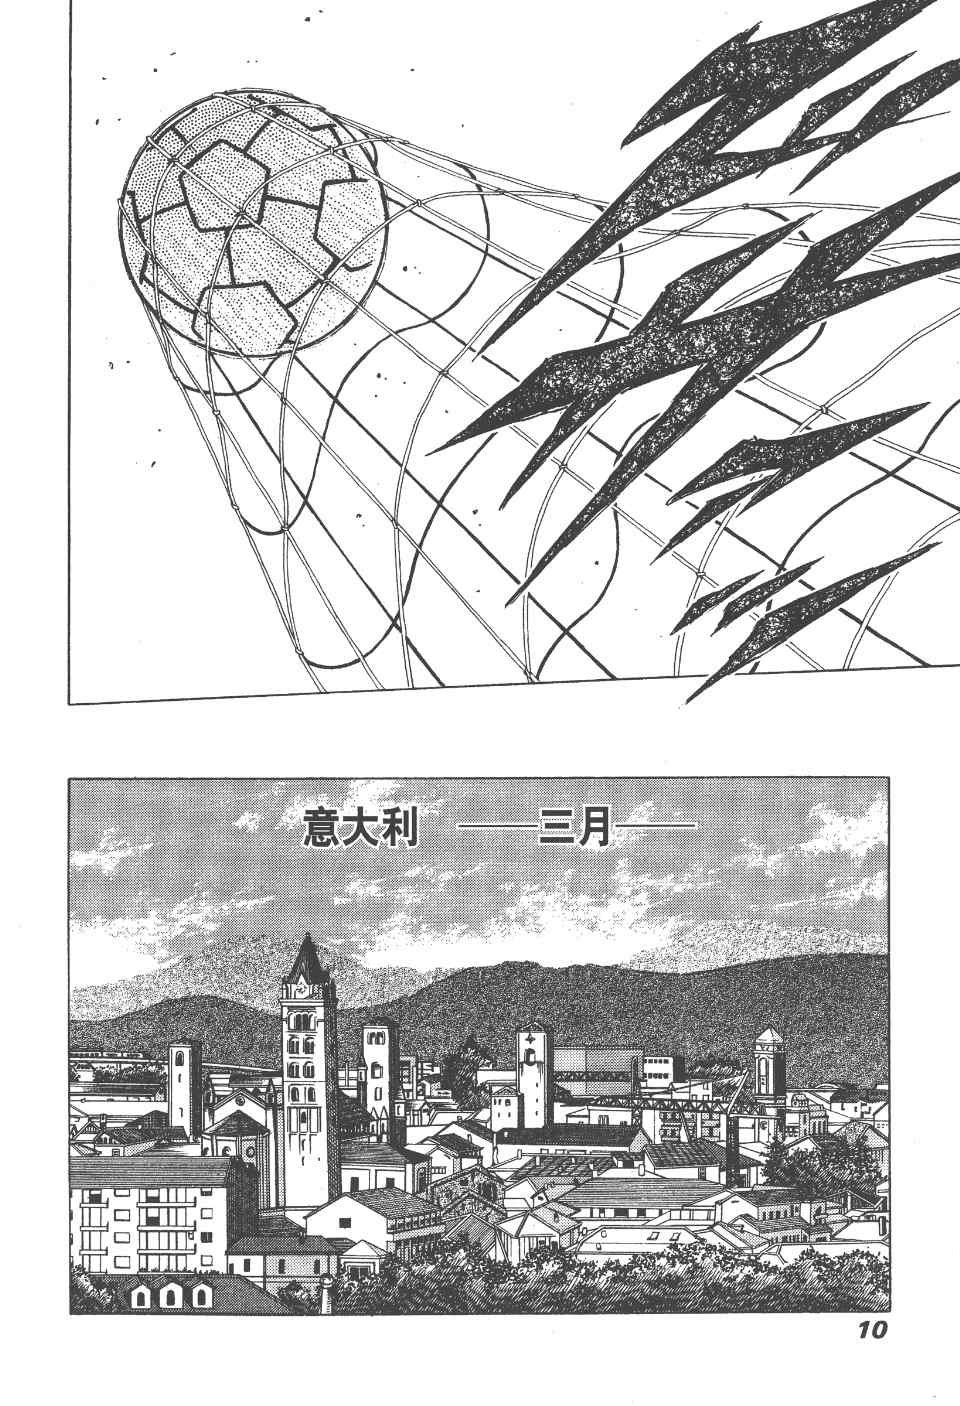 《足球小将 海外激斗篇 IN CALCIO》漫画 IN CALCIO 01卷